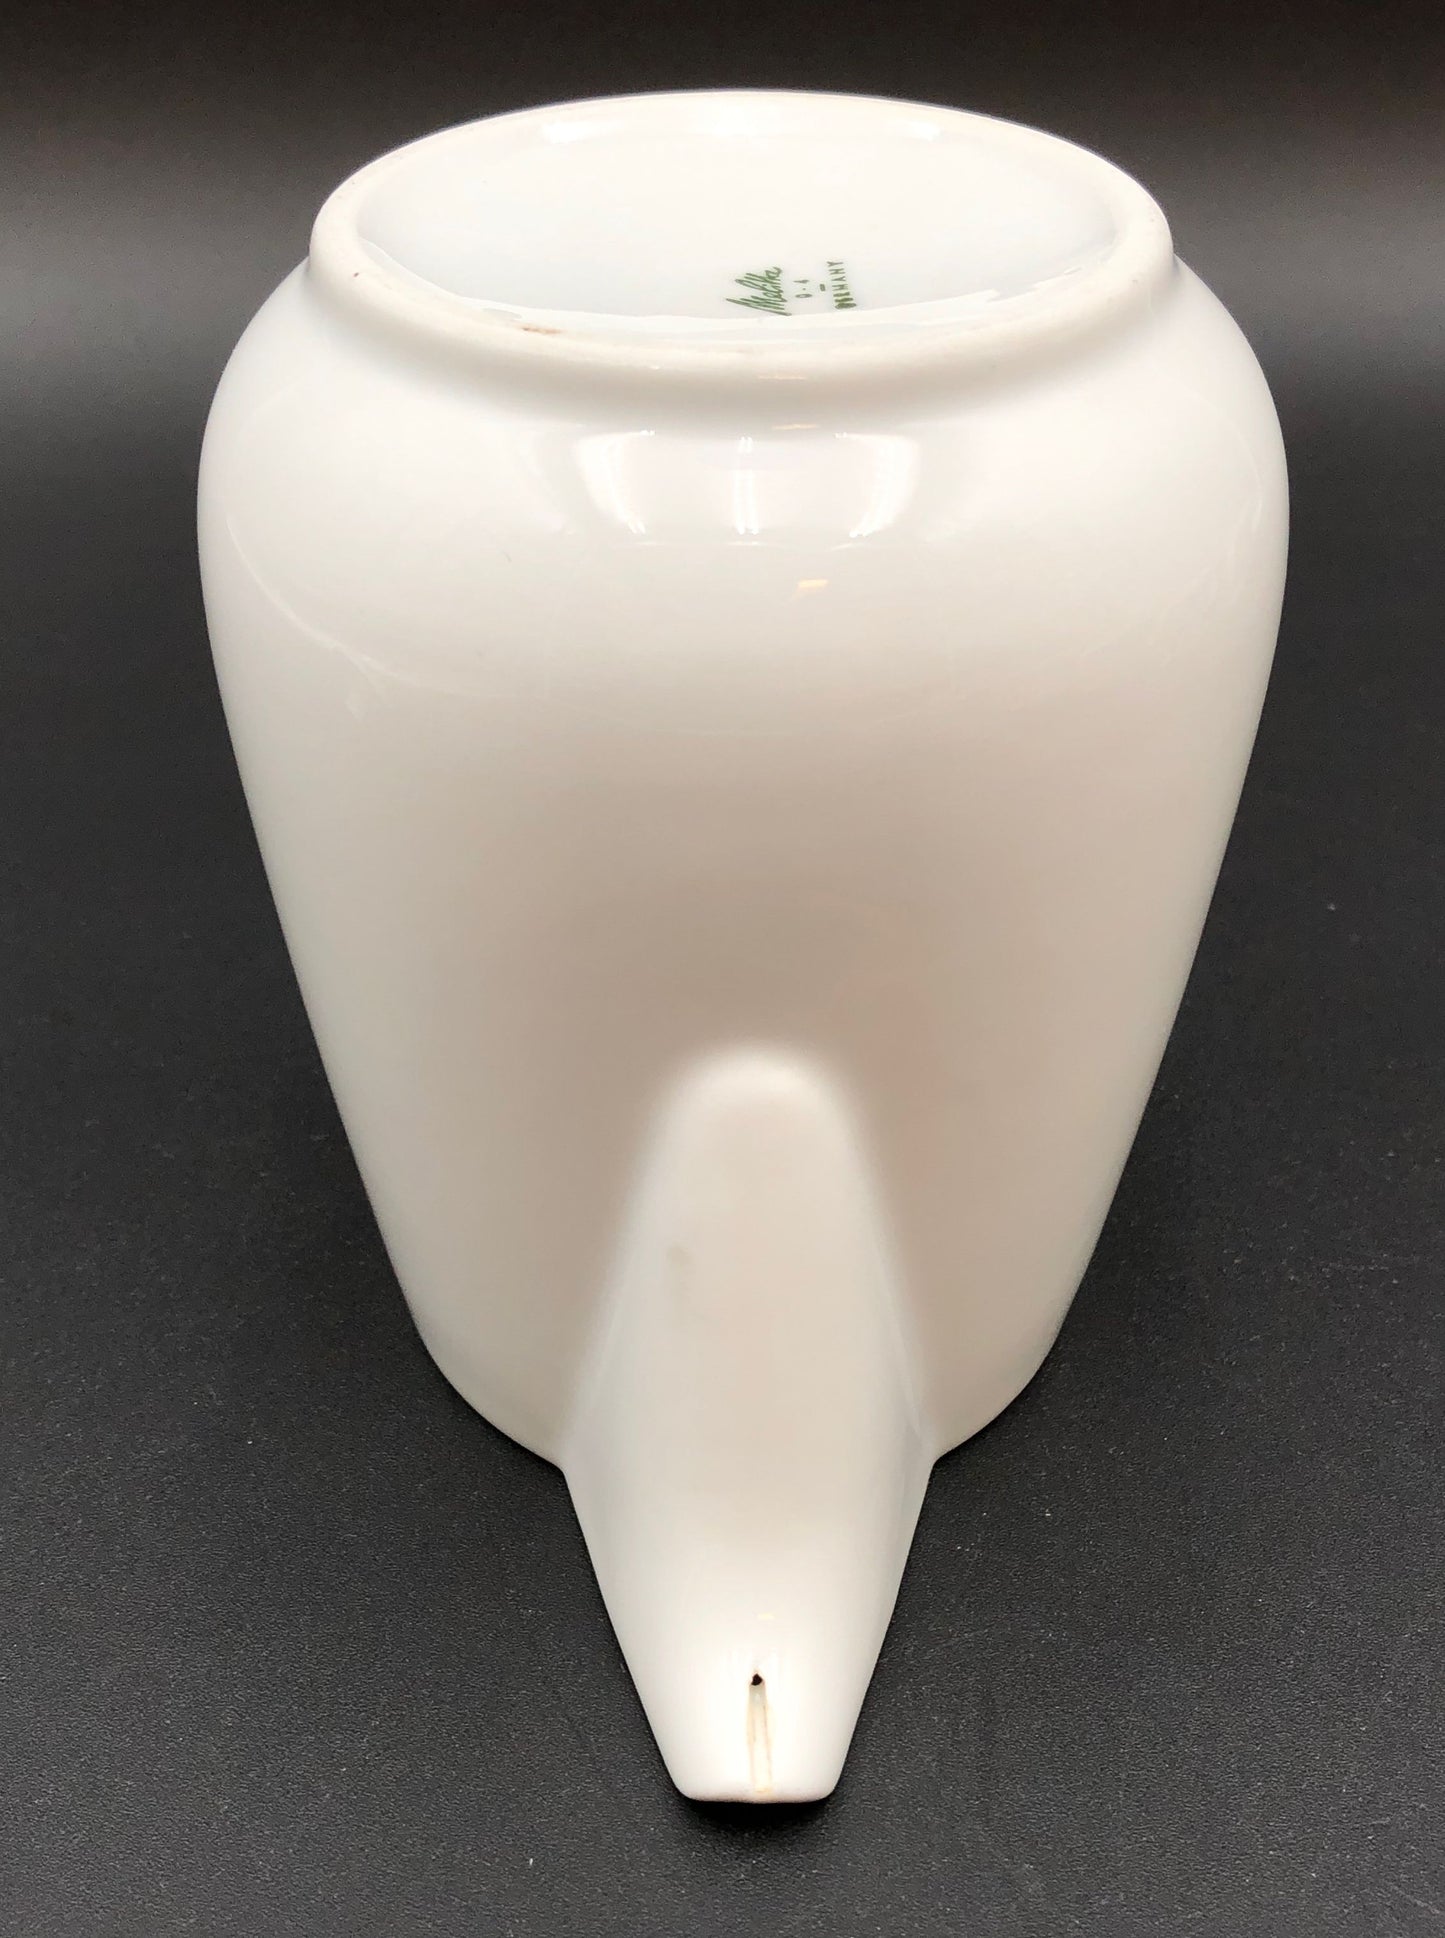 Vintage Melitta White Porcelain Tea / Coffee Pot With No Drip Spout - Germany